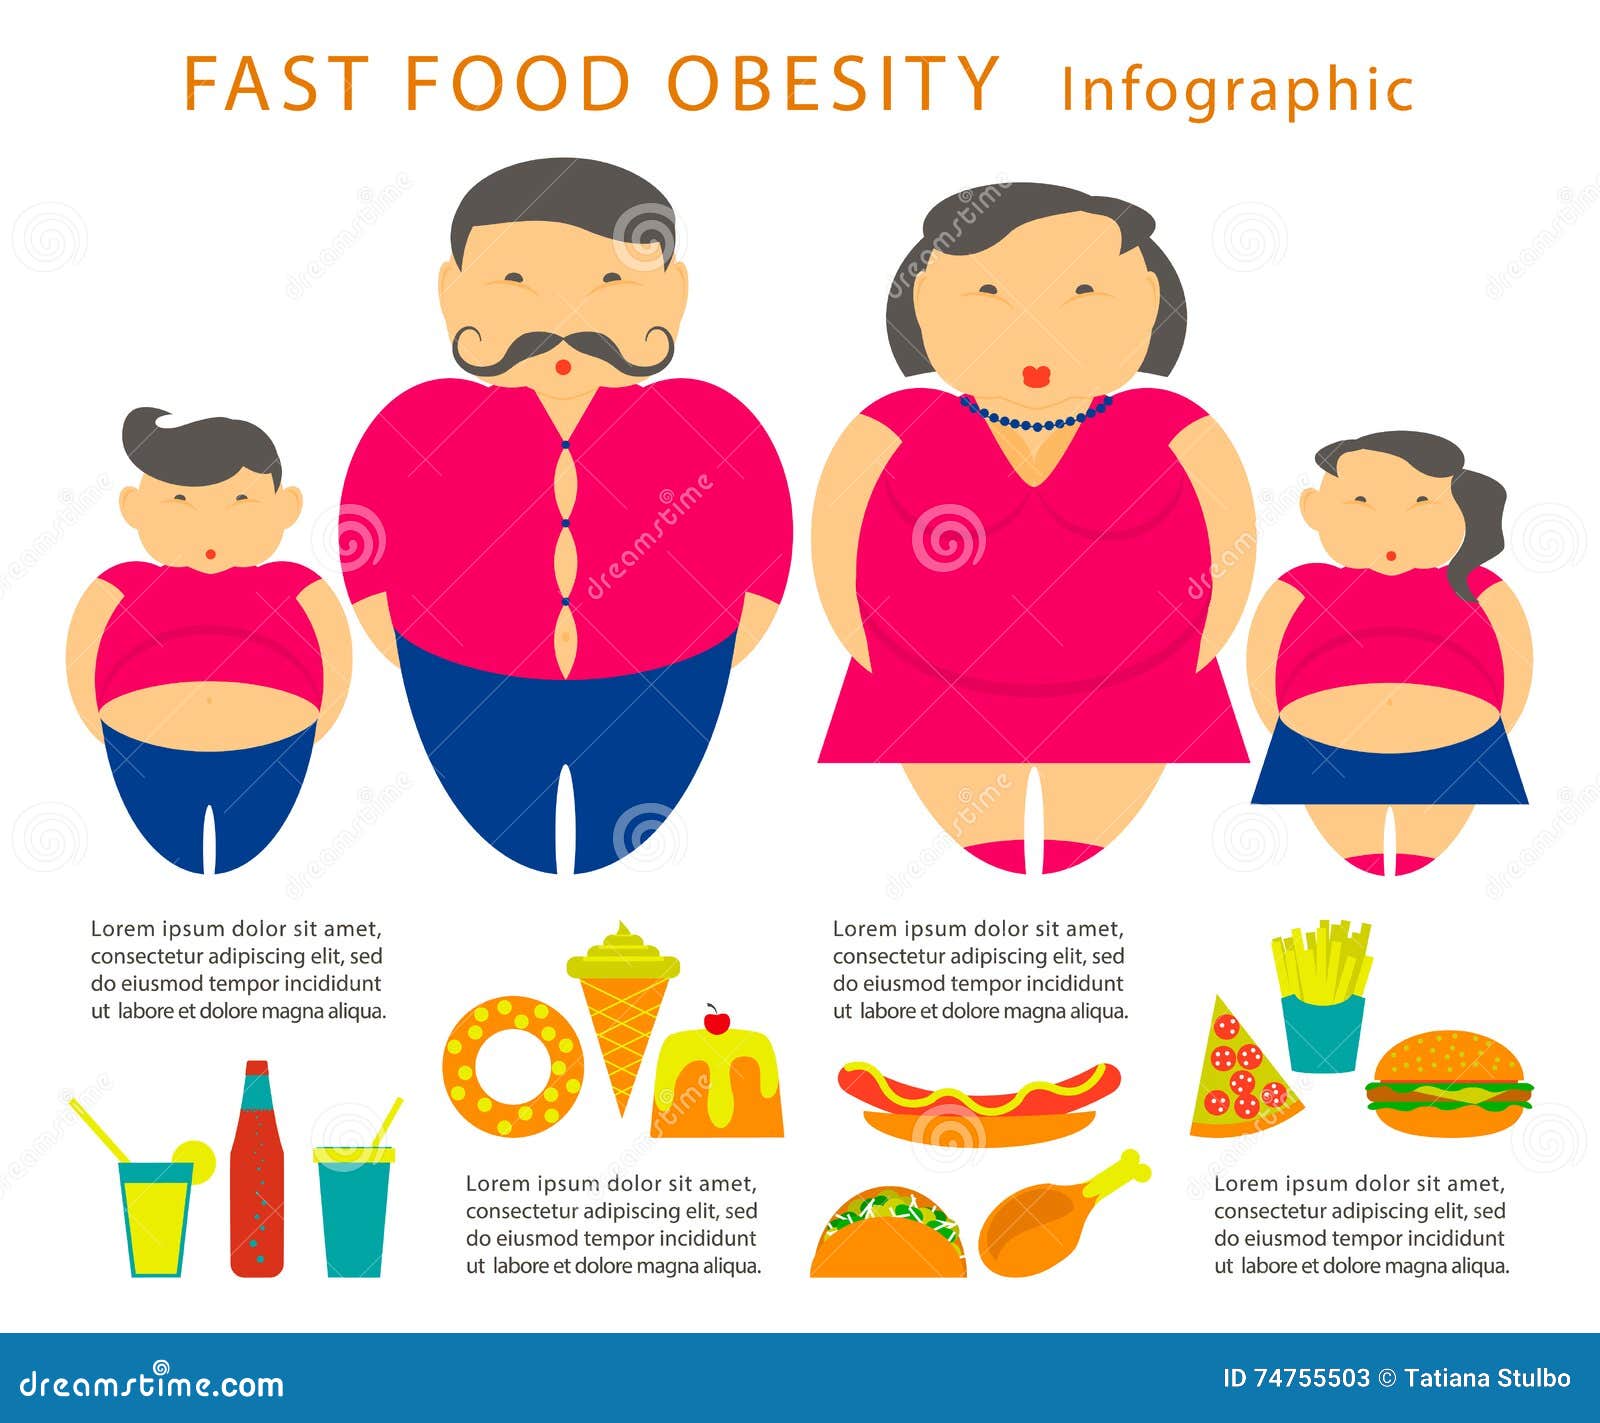 Childhood Obesity Infographic